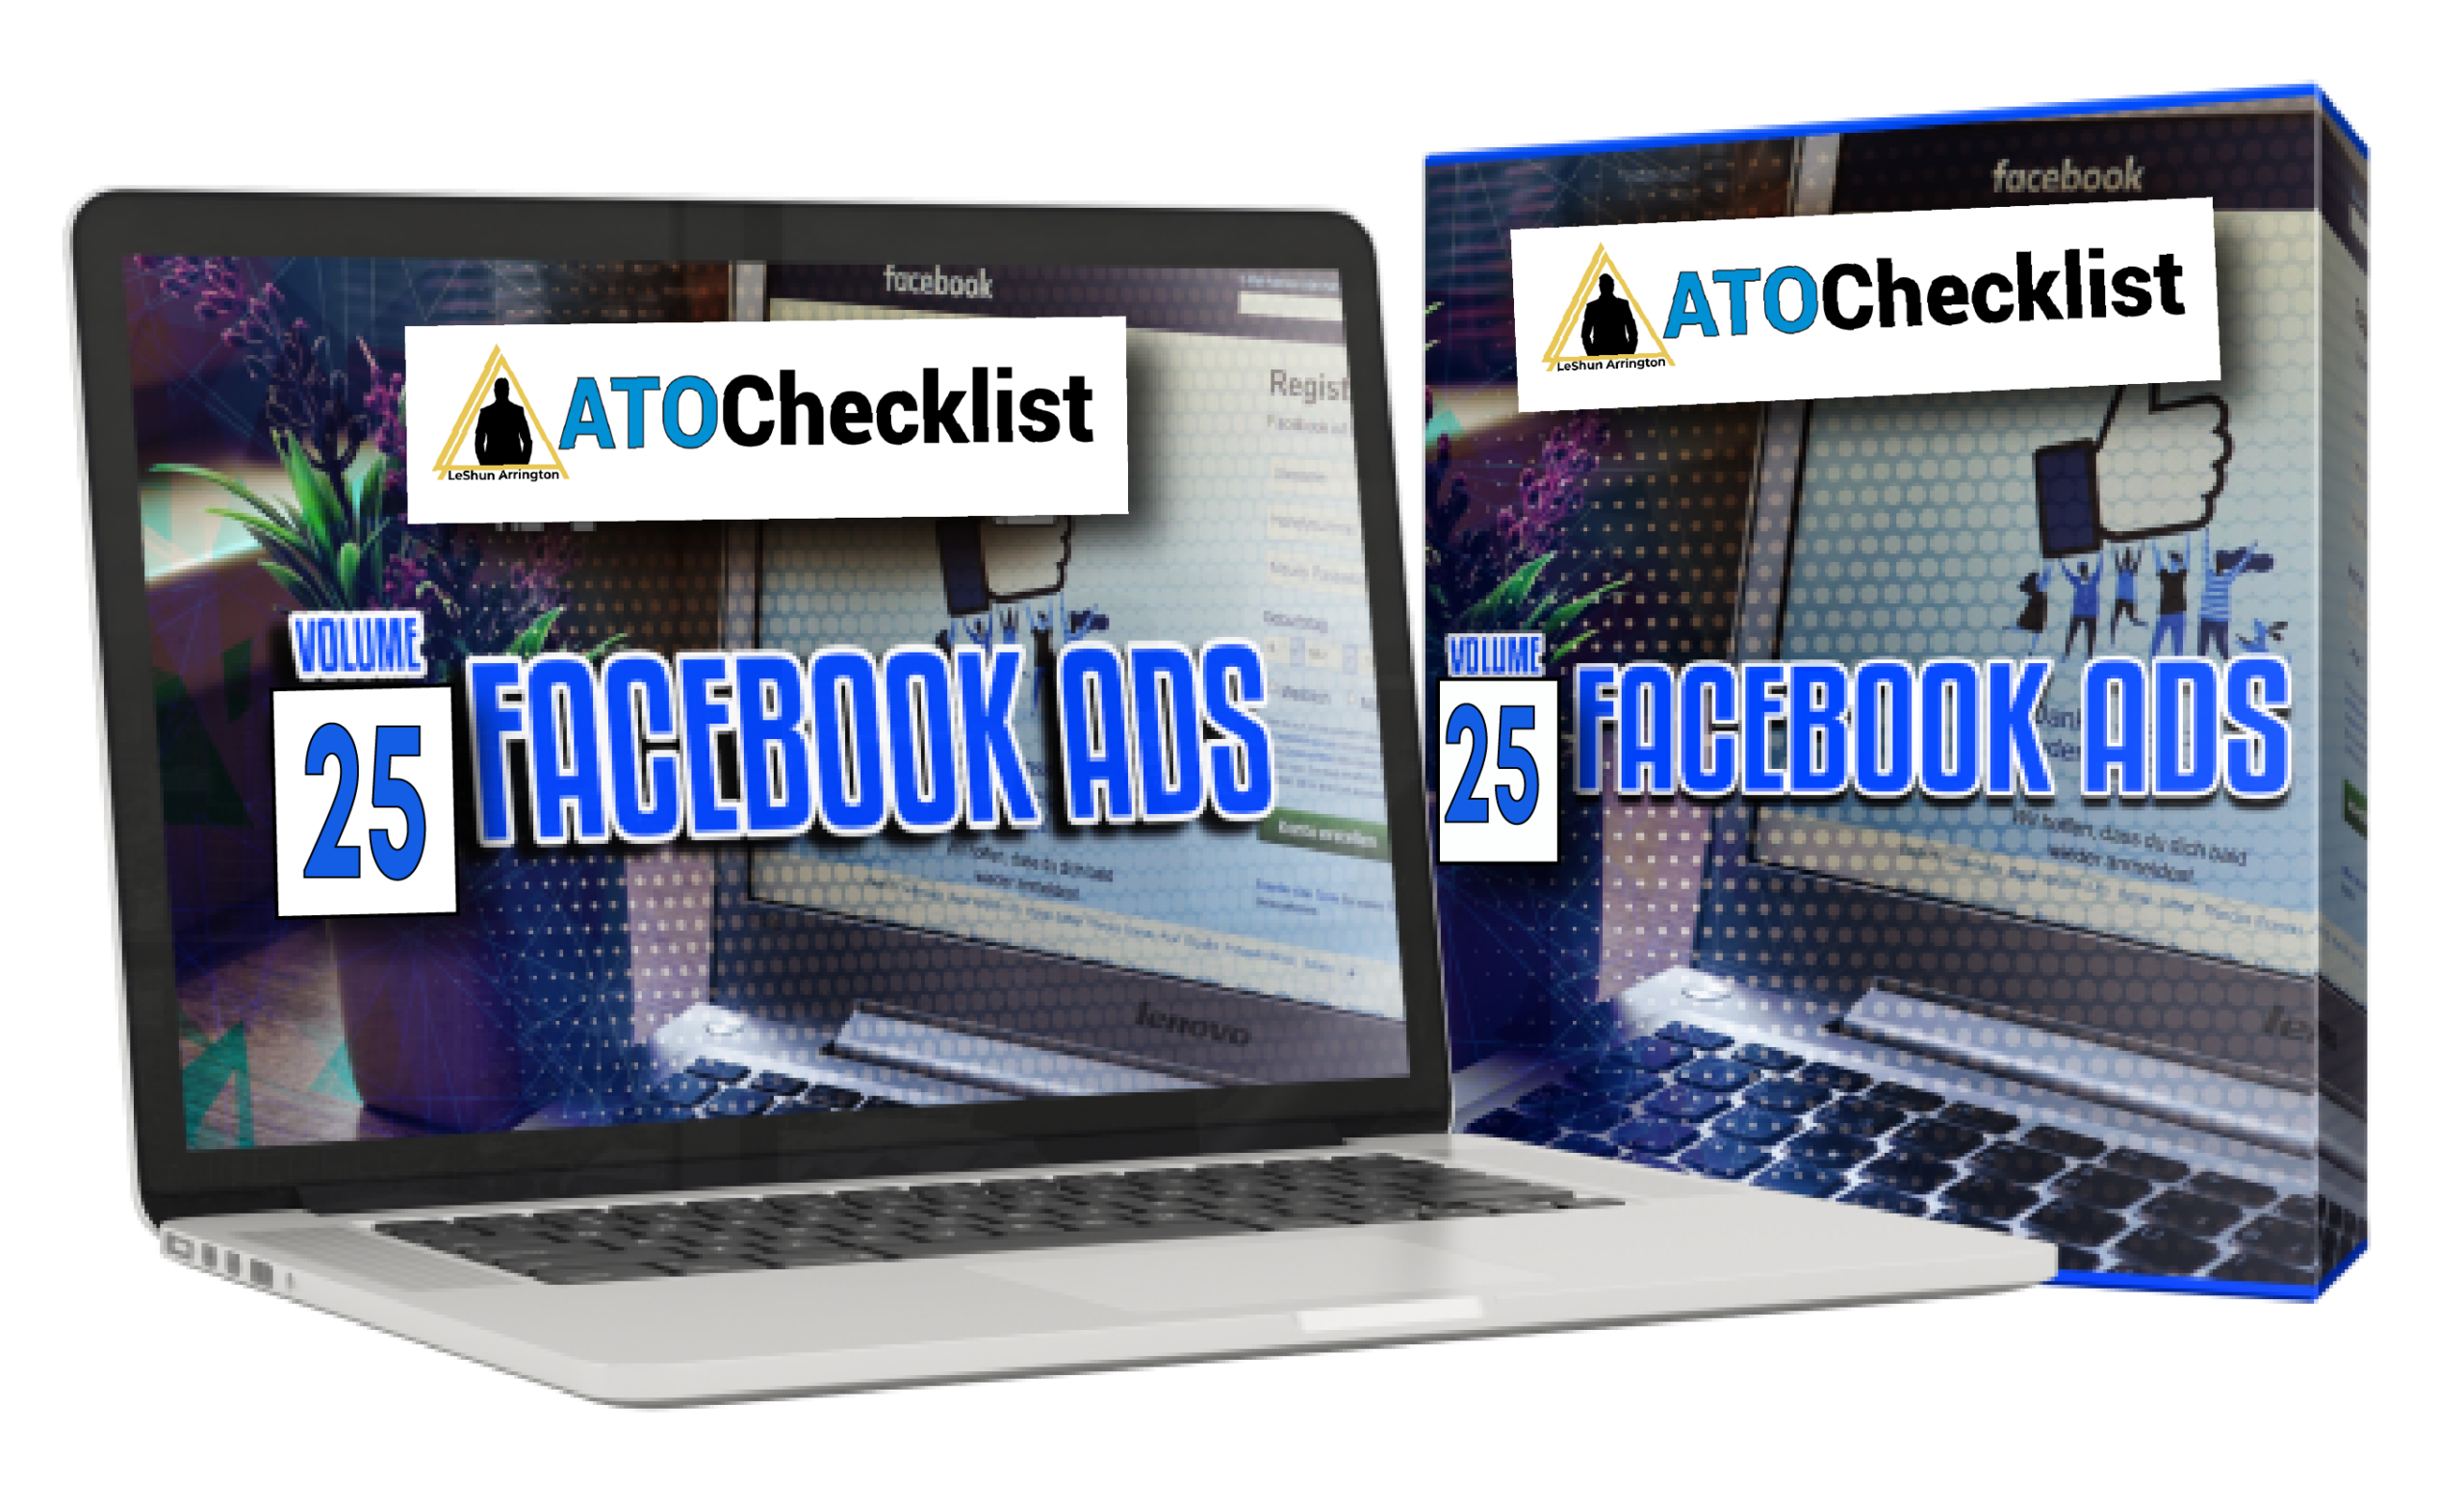 ATO-CHECKLISTS-FACEBOOK_ADS